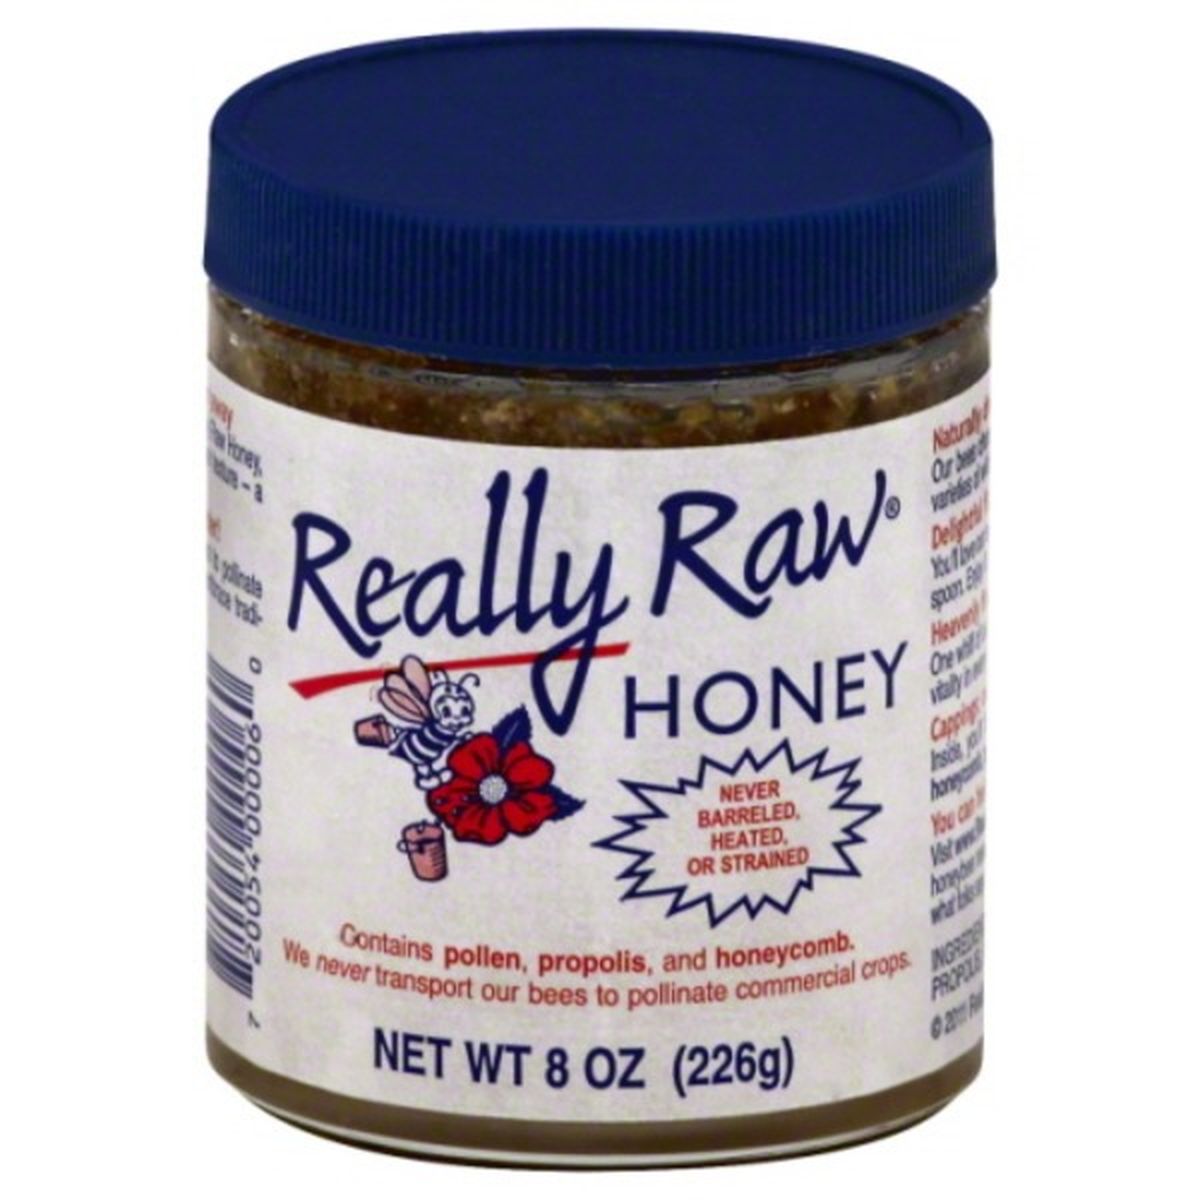 Calories in Really Raw Honey Honey